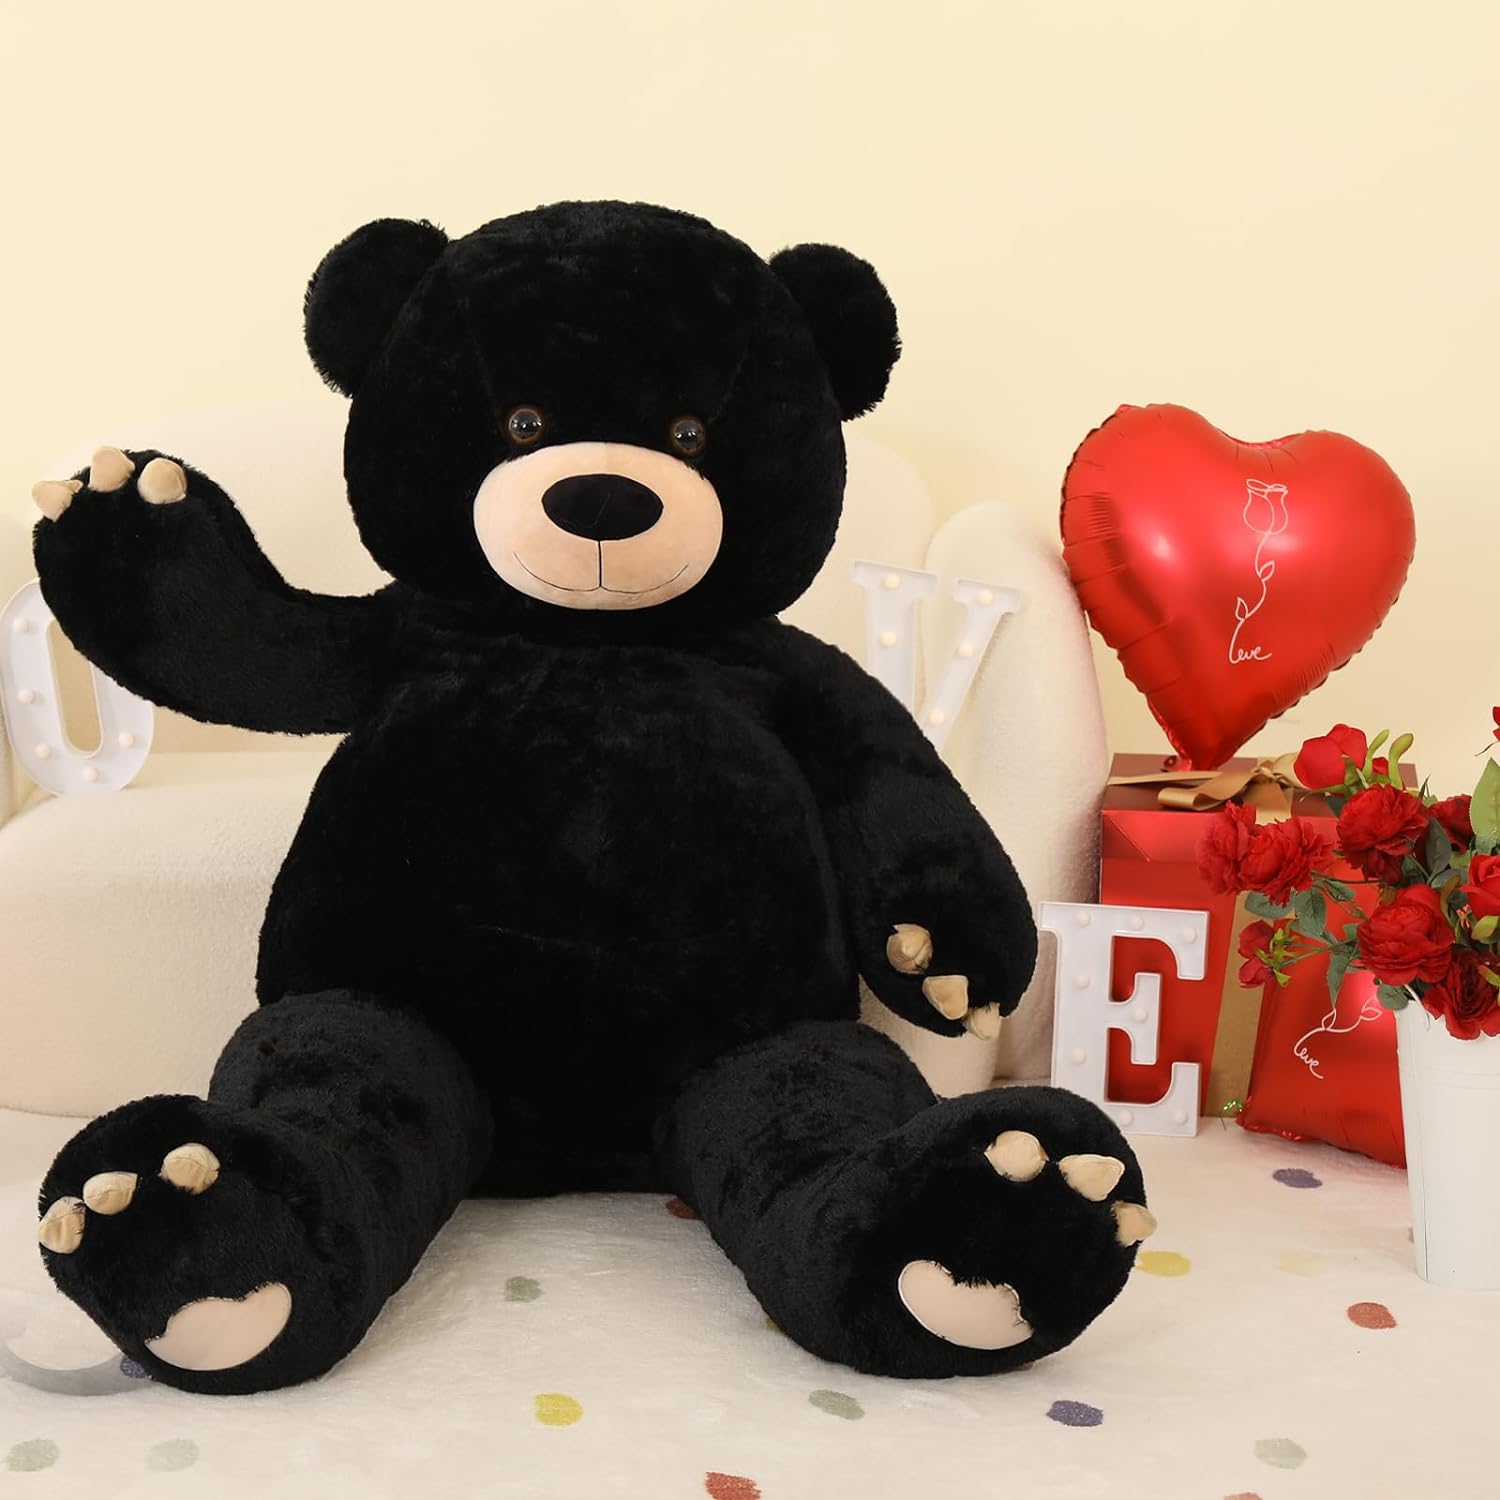 Large Teddy Bear Plush Toy, Black, 59 Inches